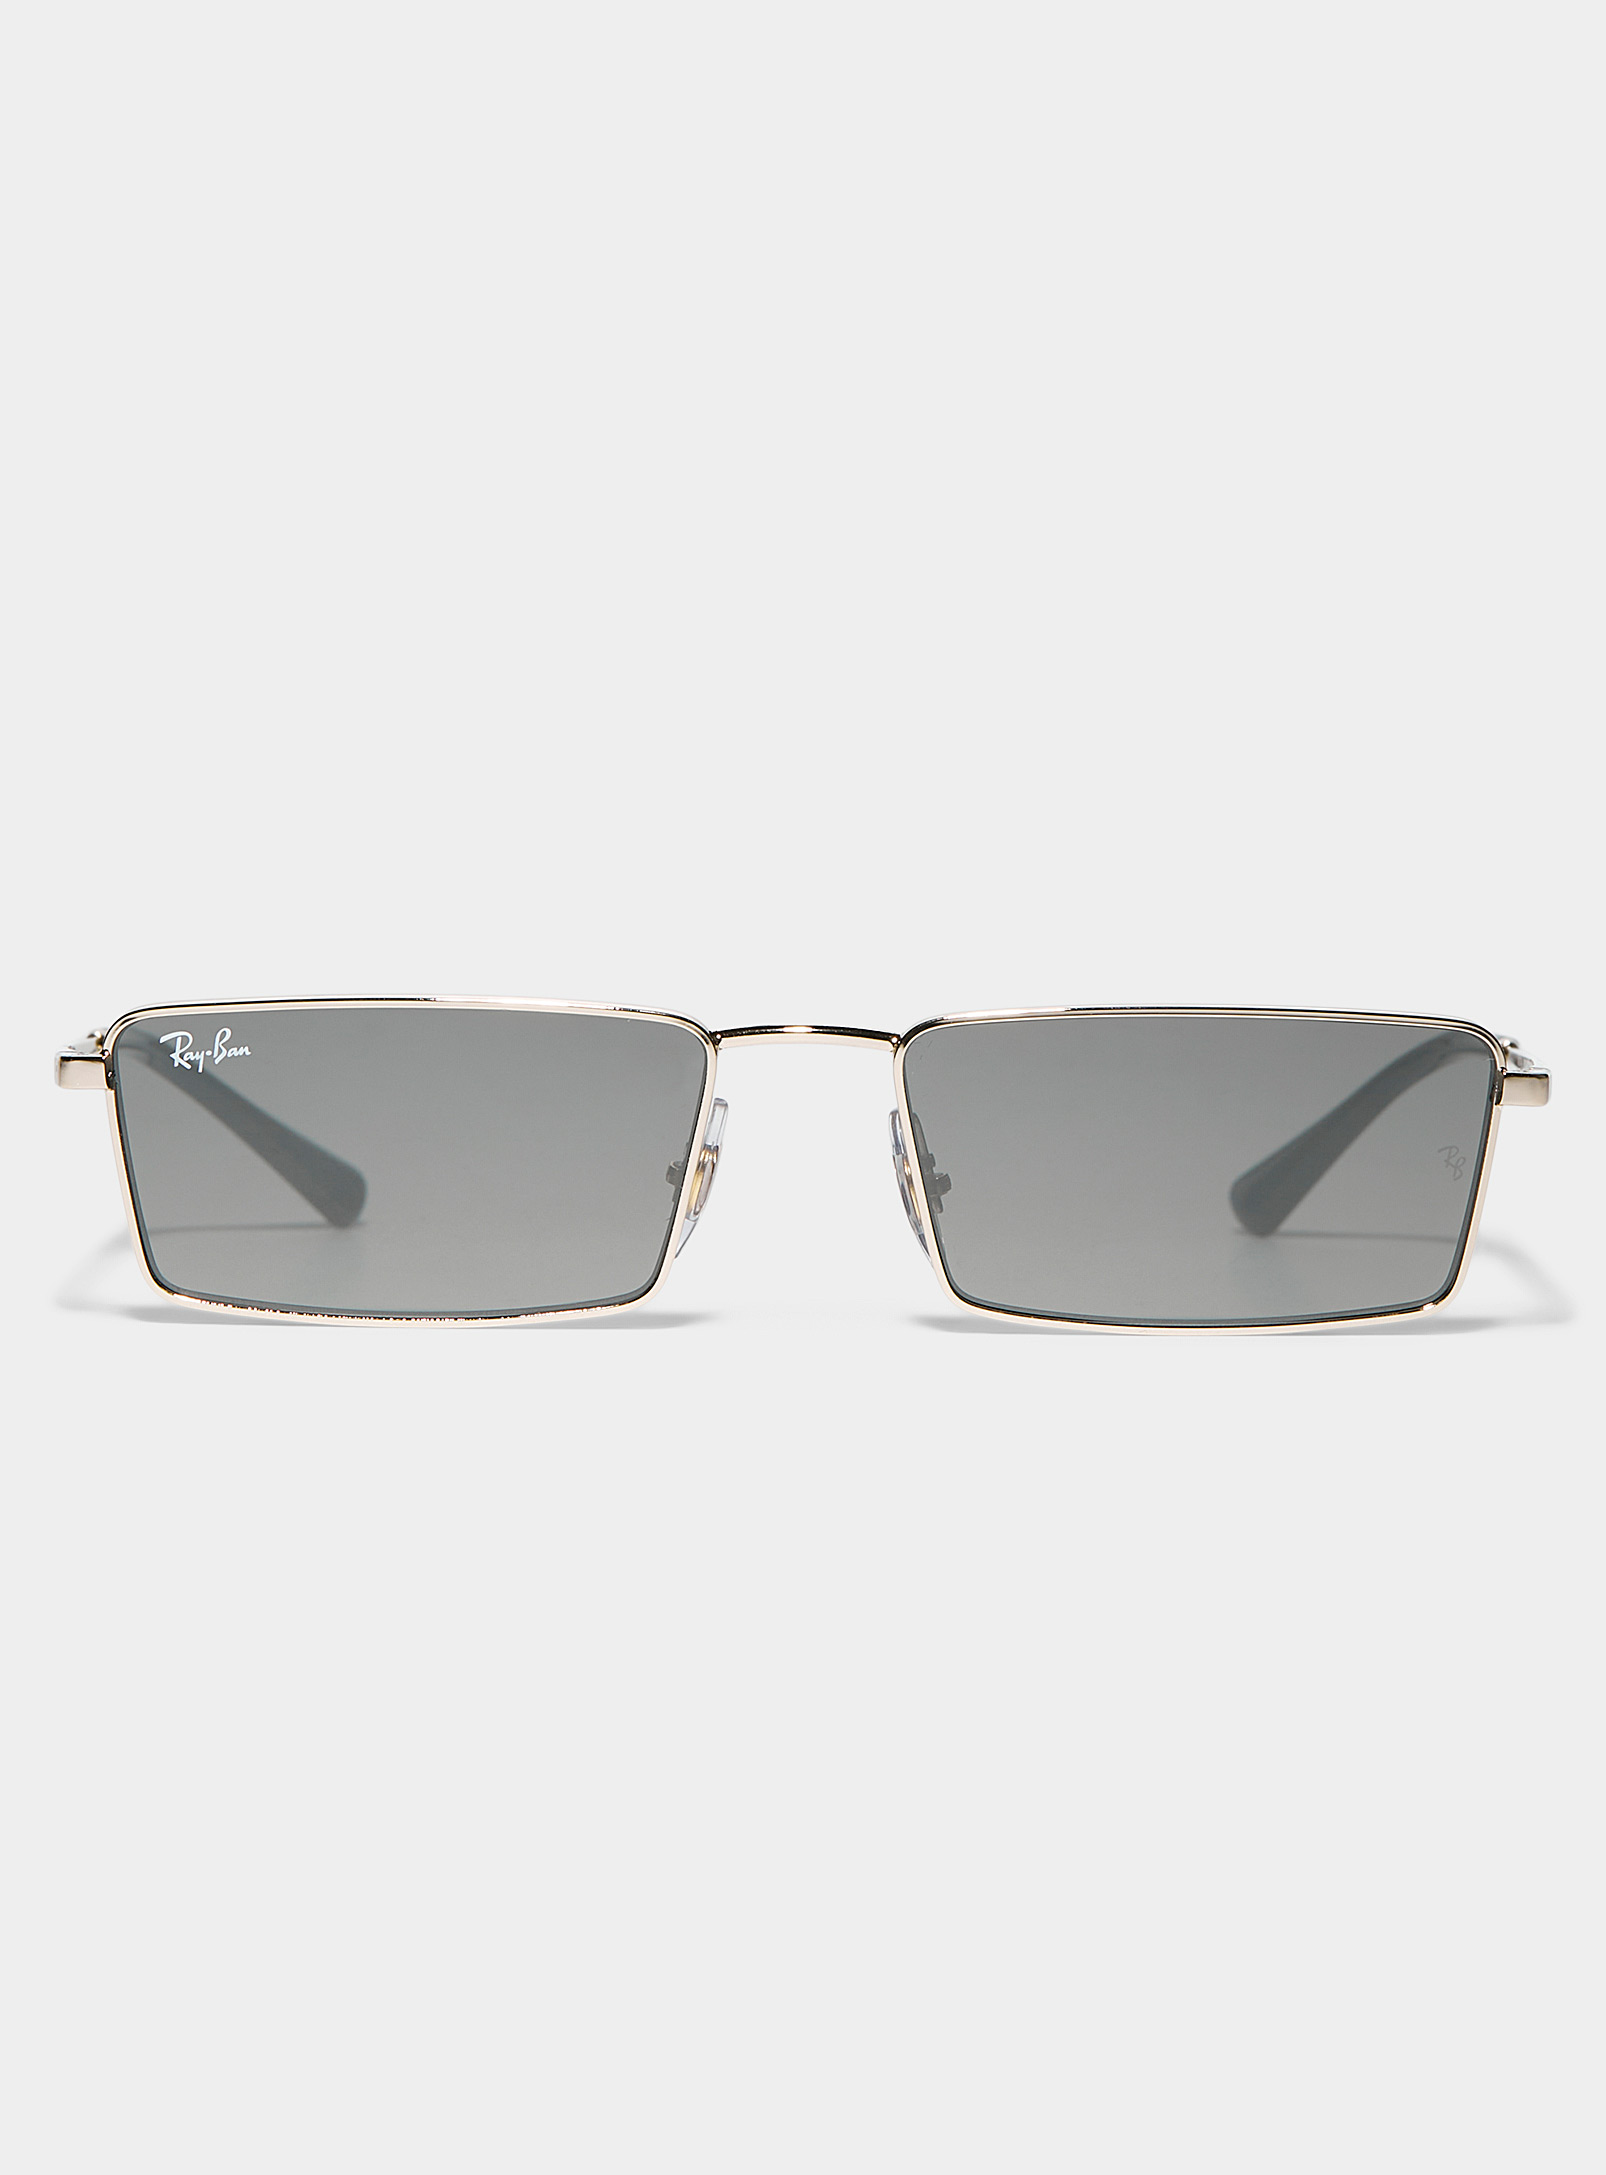 Ray Ban Retro Rectangular Sunglasses In Metallic